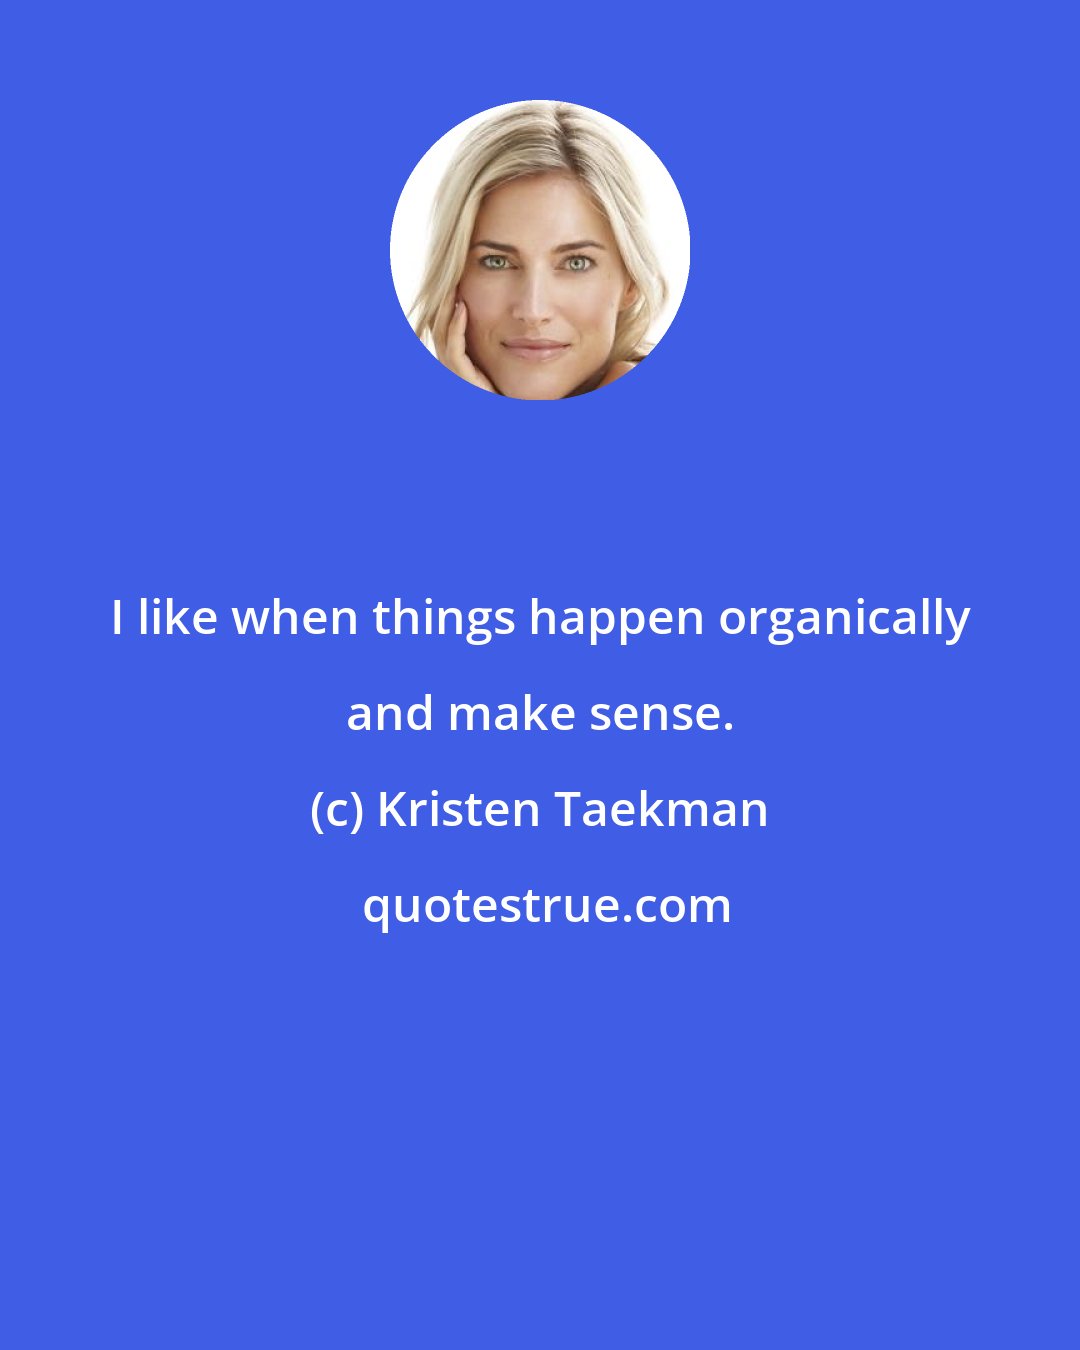 Kristen Taekman: I like when things happen organically and make sense.